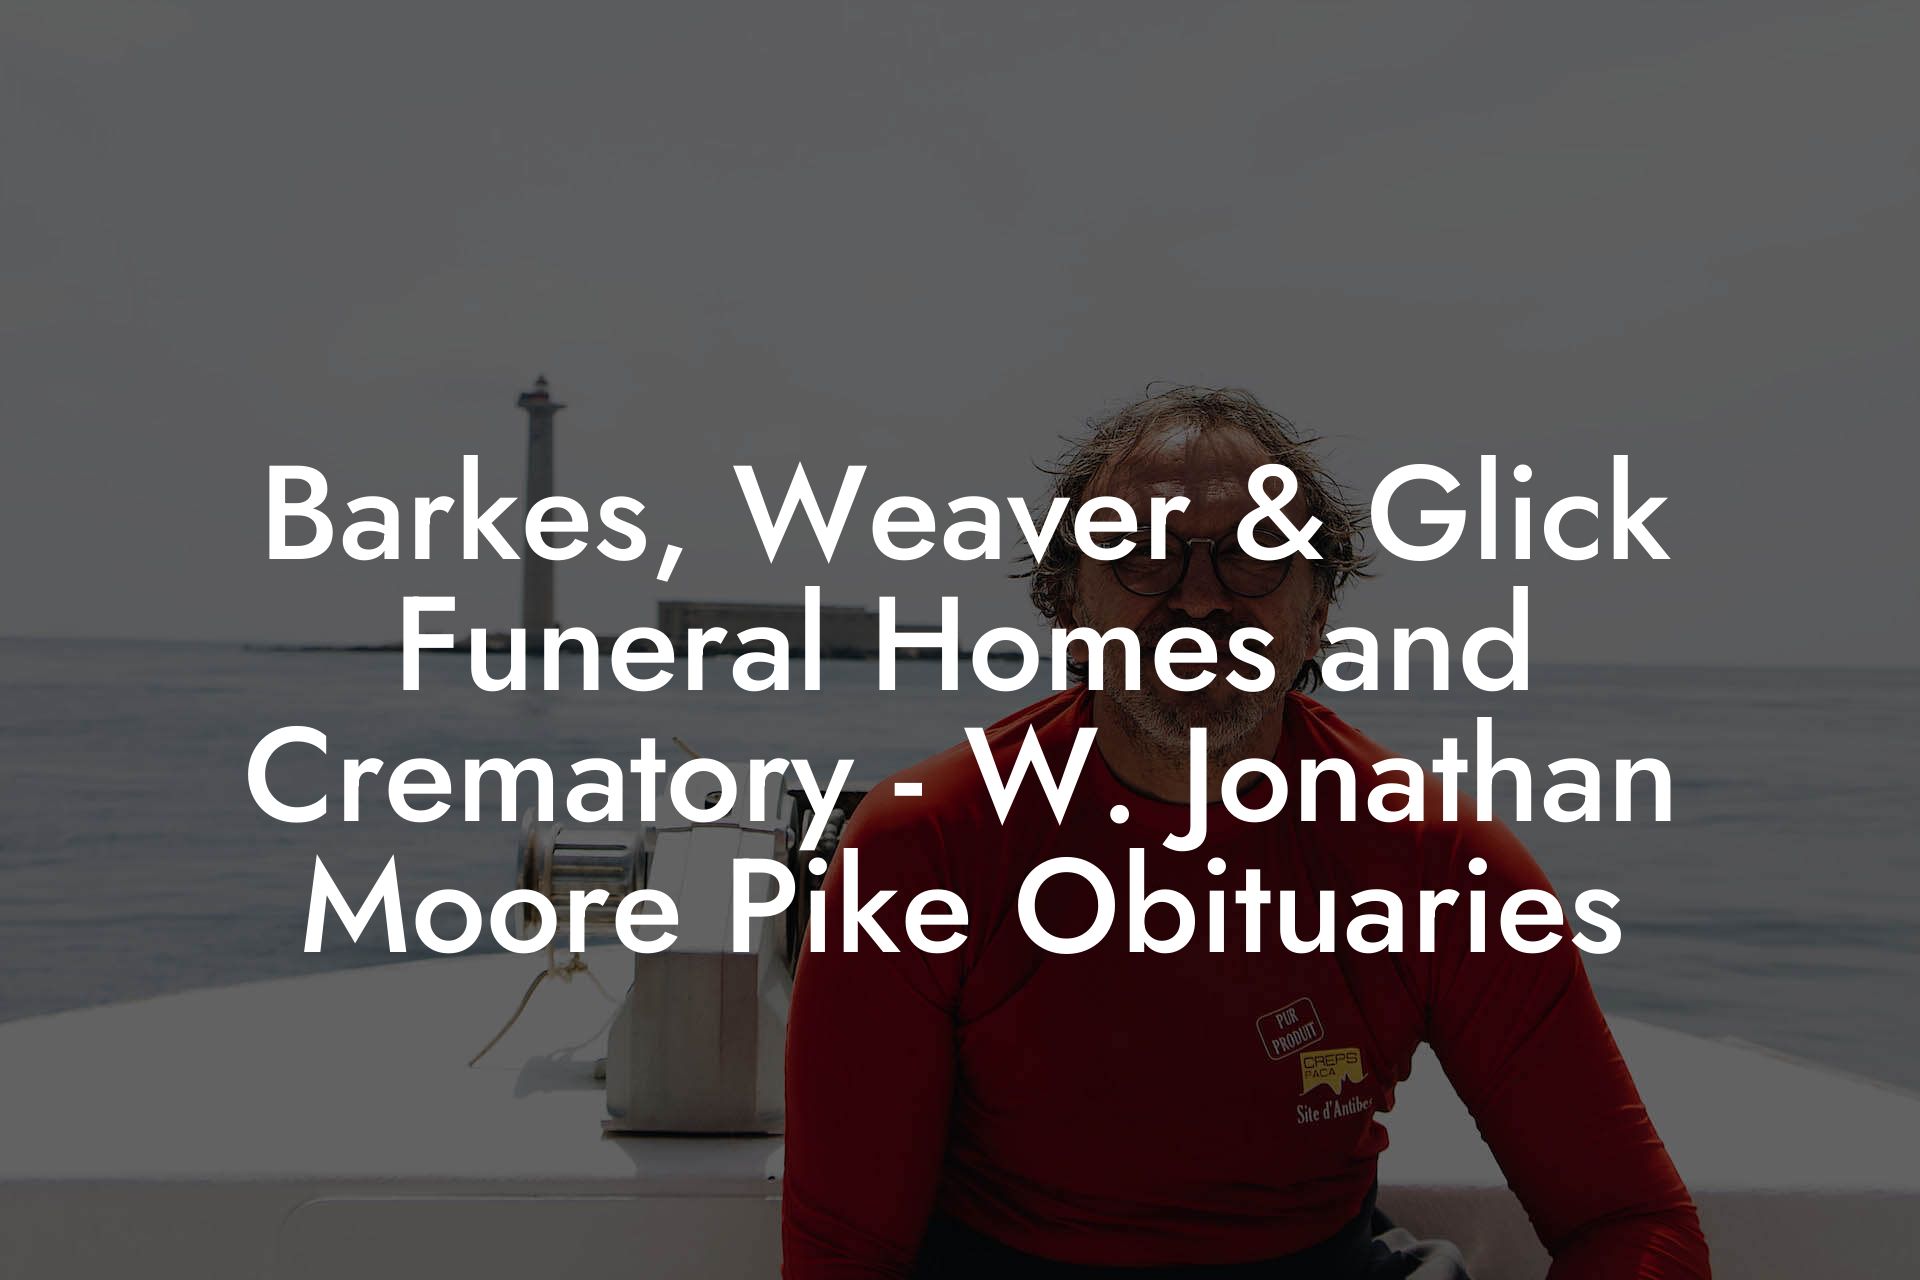 Barkes, Weaver & Glick Funeral Homes and Crematory - W. Jonathan Moore Pike Obituaries